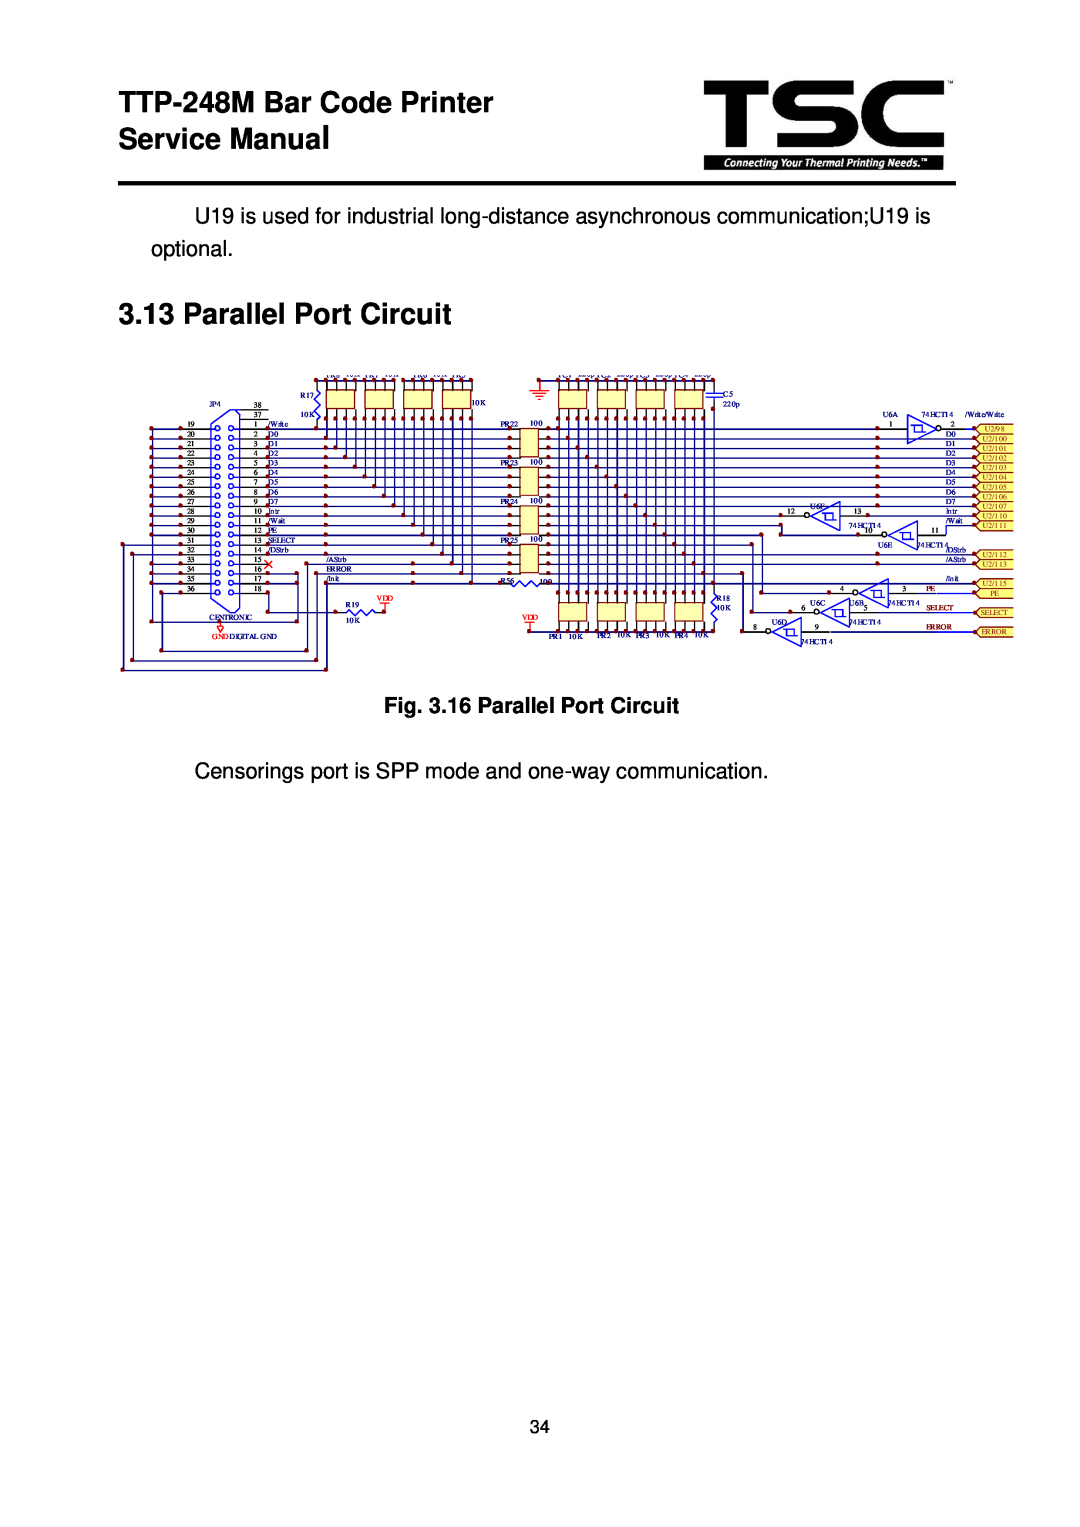 The Speaker Company TTP 248M 16 Parallel Port Circuit, TTP-248M Bar Code Printer Service Manual, Select, Error 